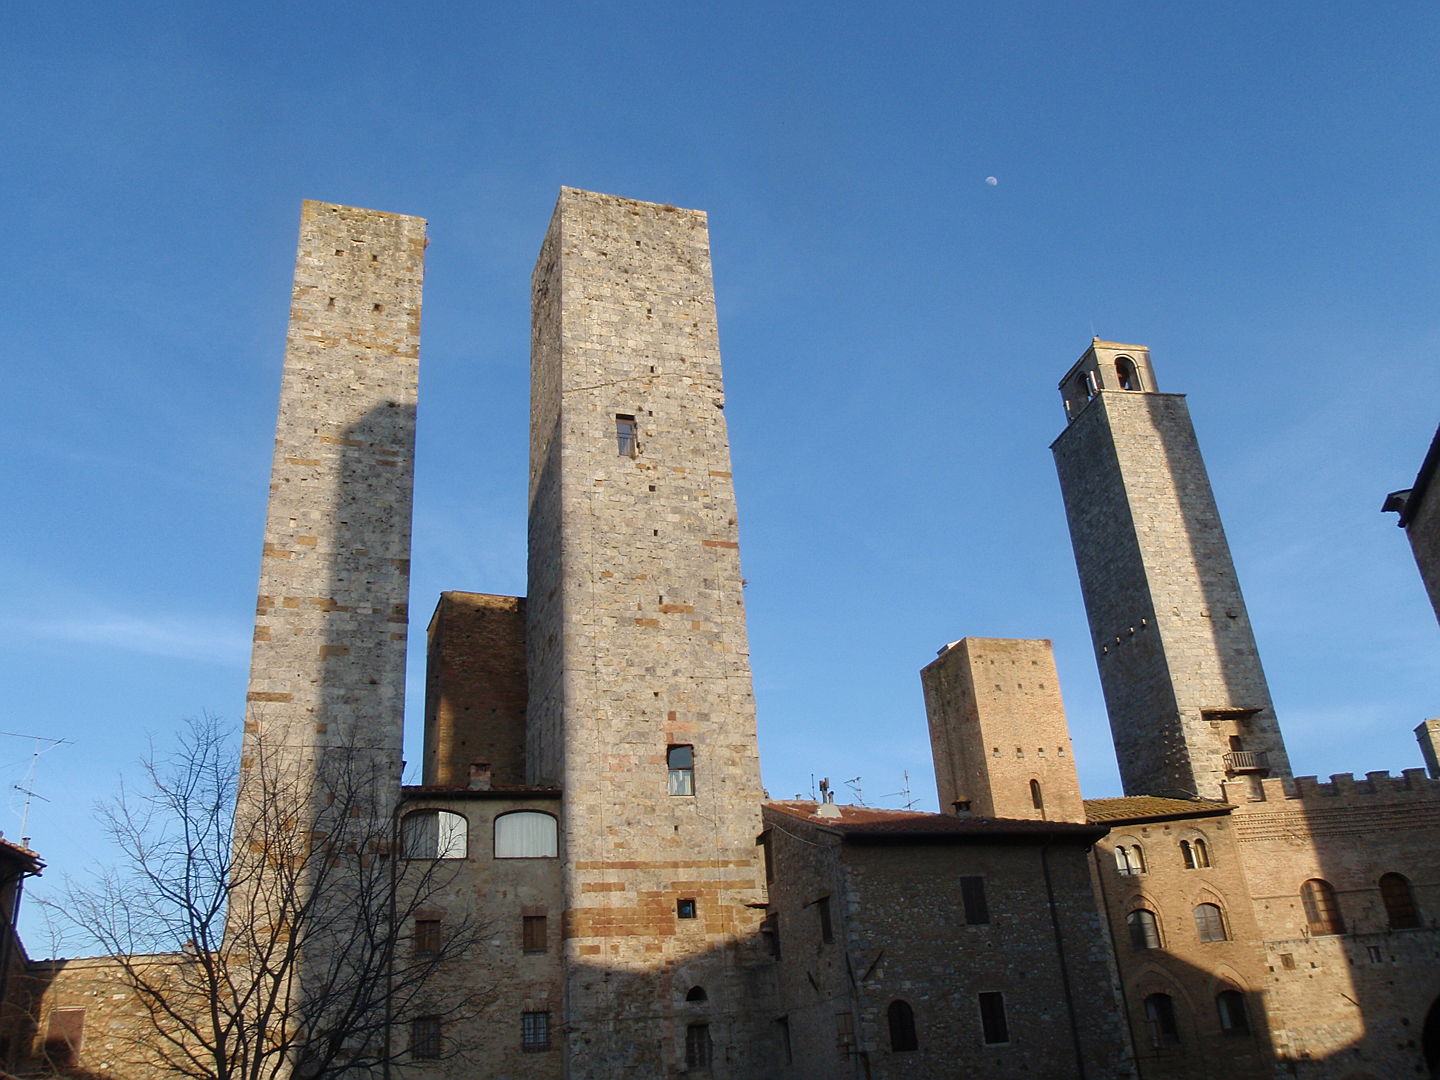  Siena (SI)
- towers-in-san-gimignano.jpg